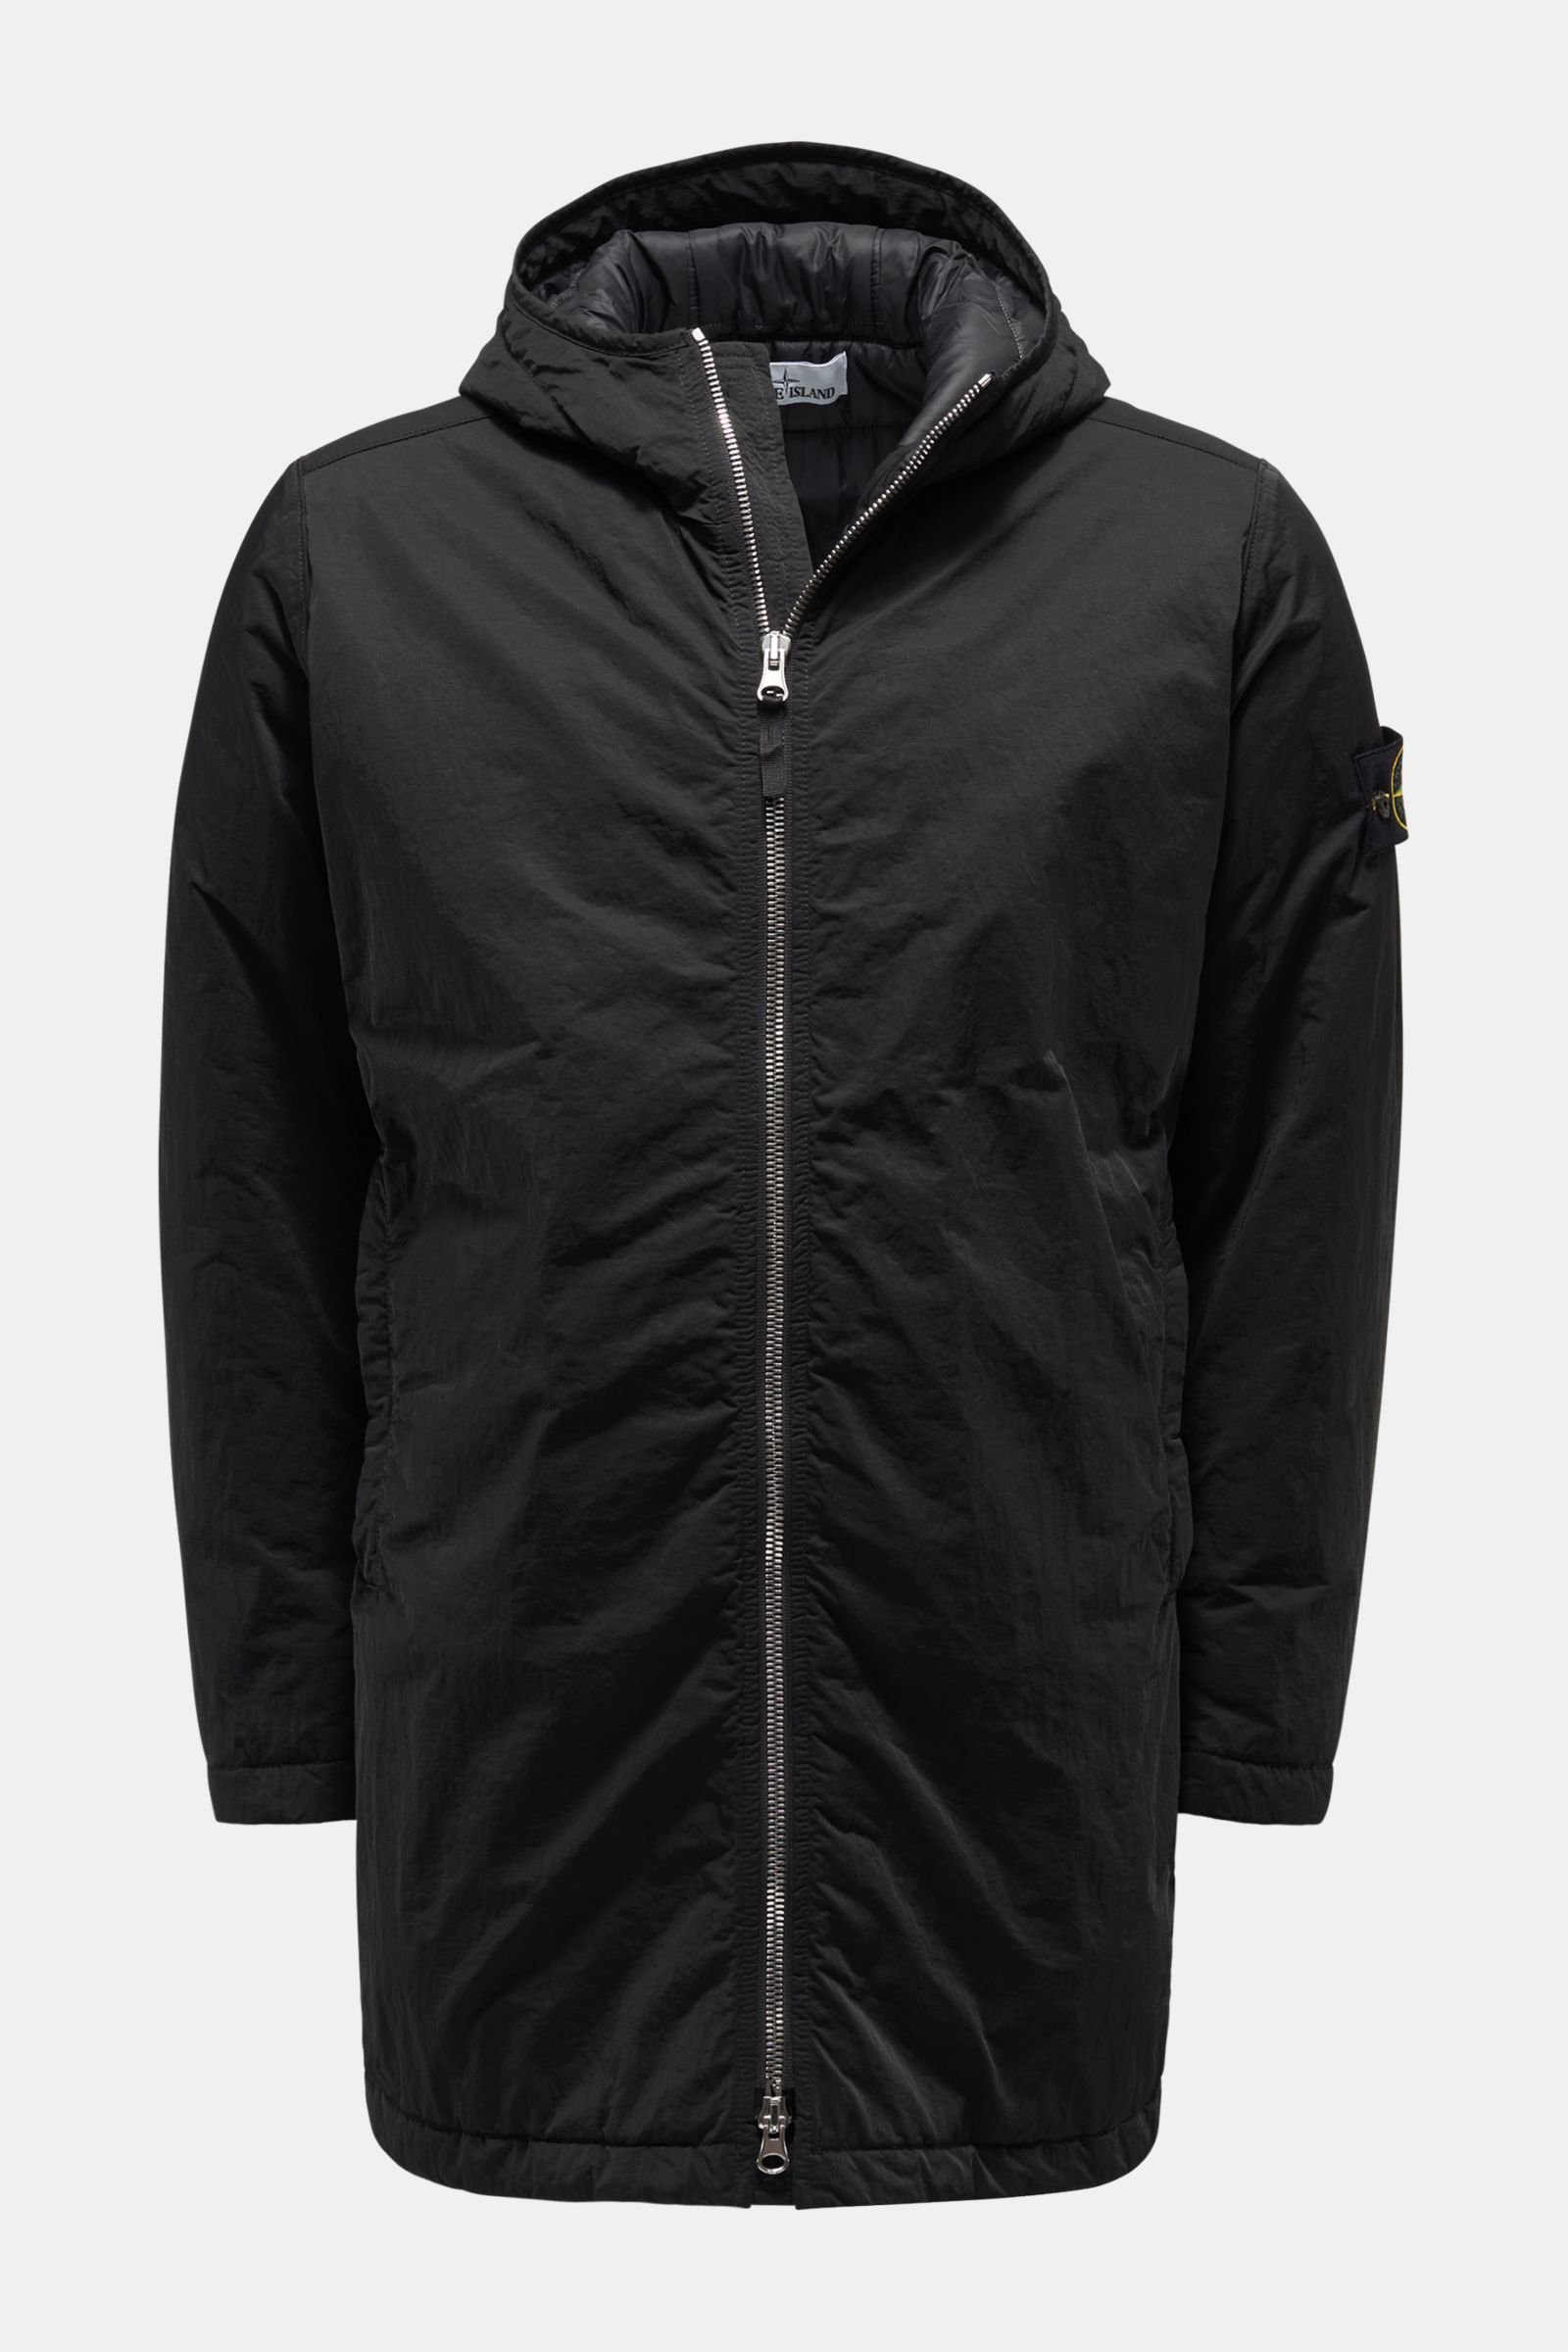 STONE ISLAND coat 'Hyper Dense Nylon Twill with Primaloft-TC' black | BRAUN Hamburg